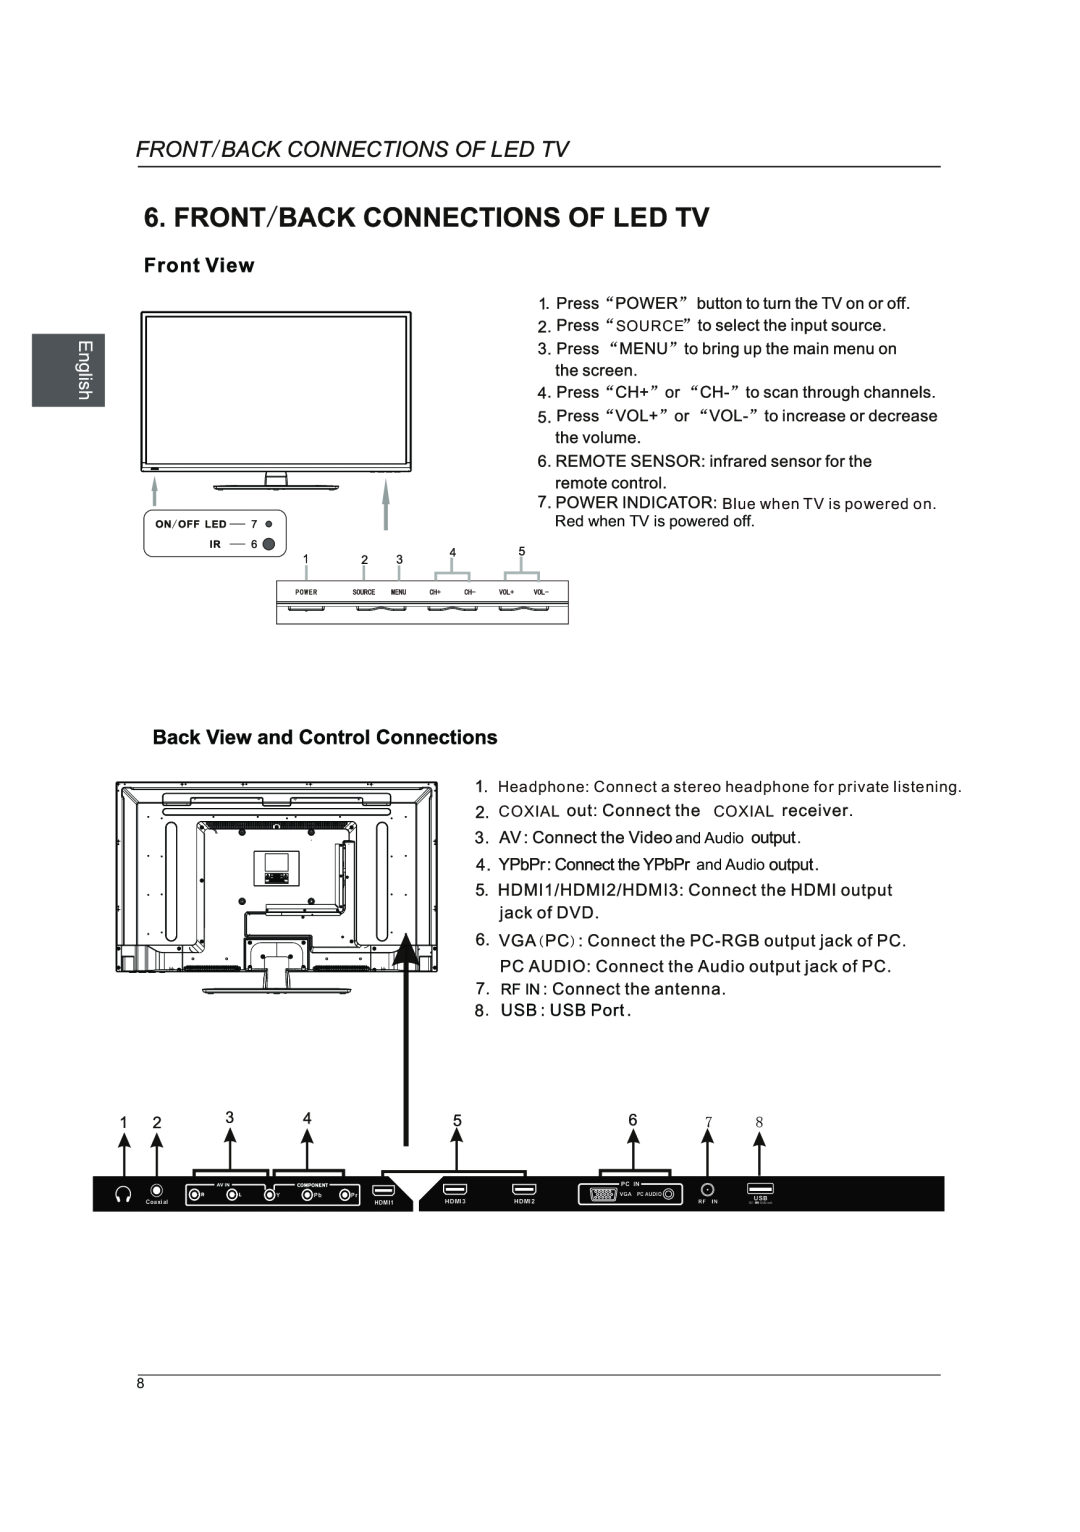 Westinghouse DWM40F1A1 manual Pc In, Vga Pc Audio, HDMI3, HDMI2, Coaxial, HDMI1, Rf In 